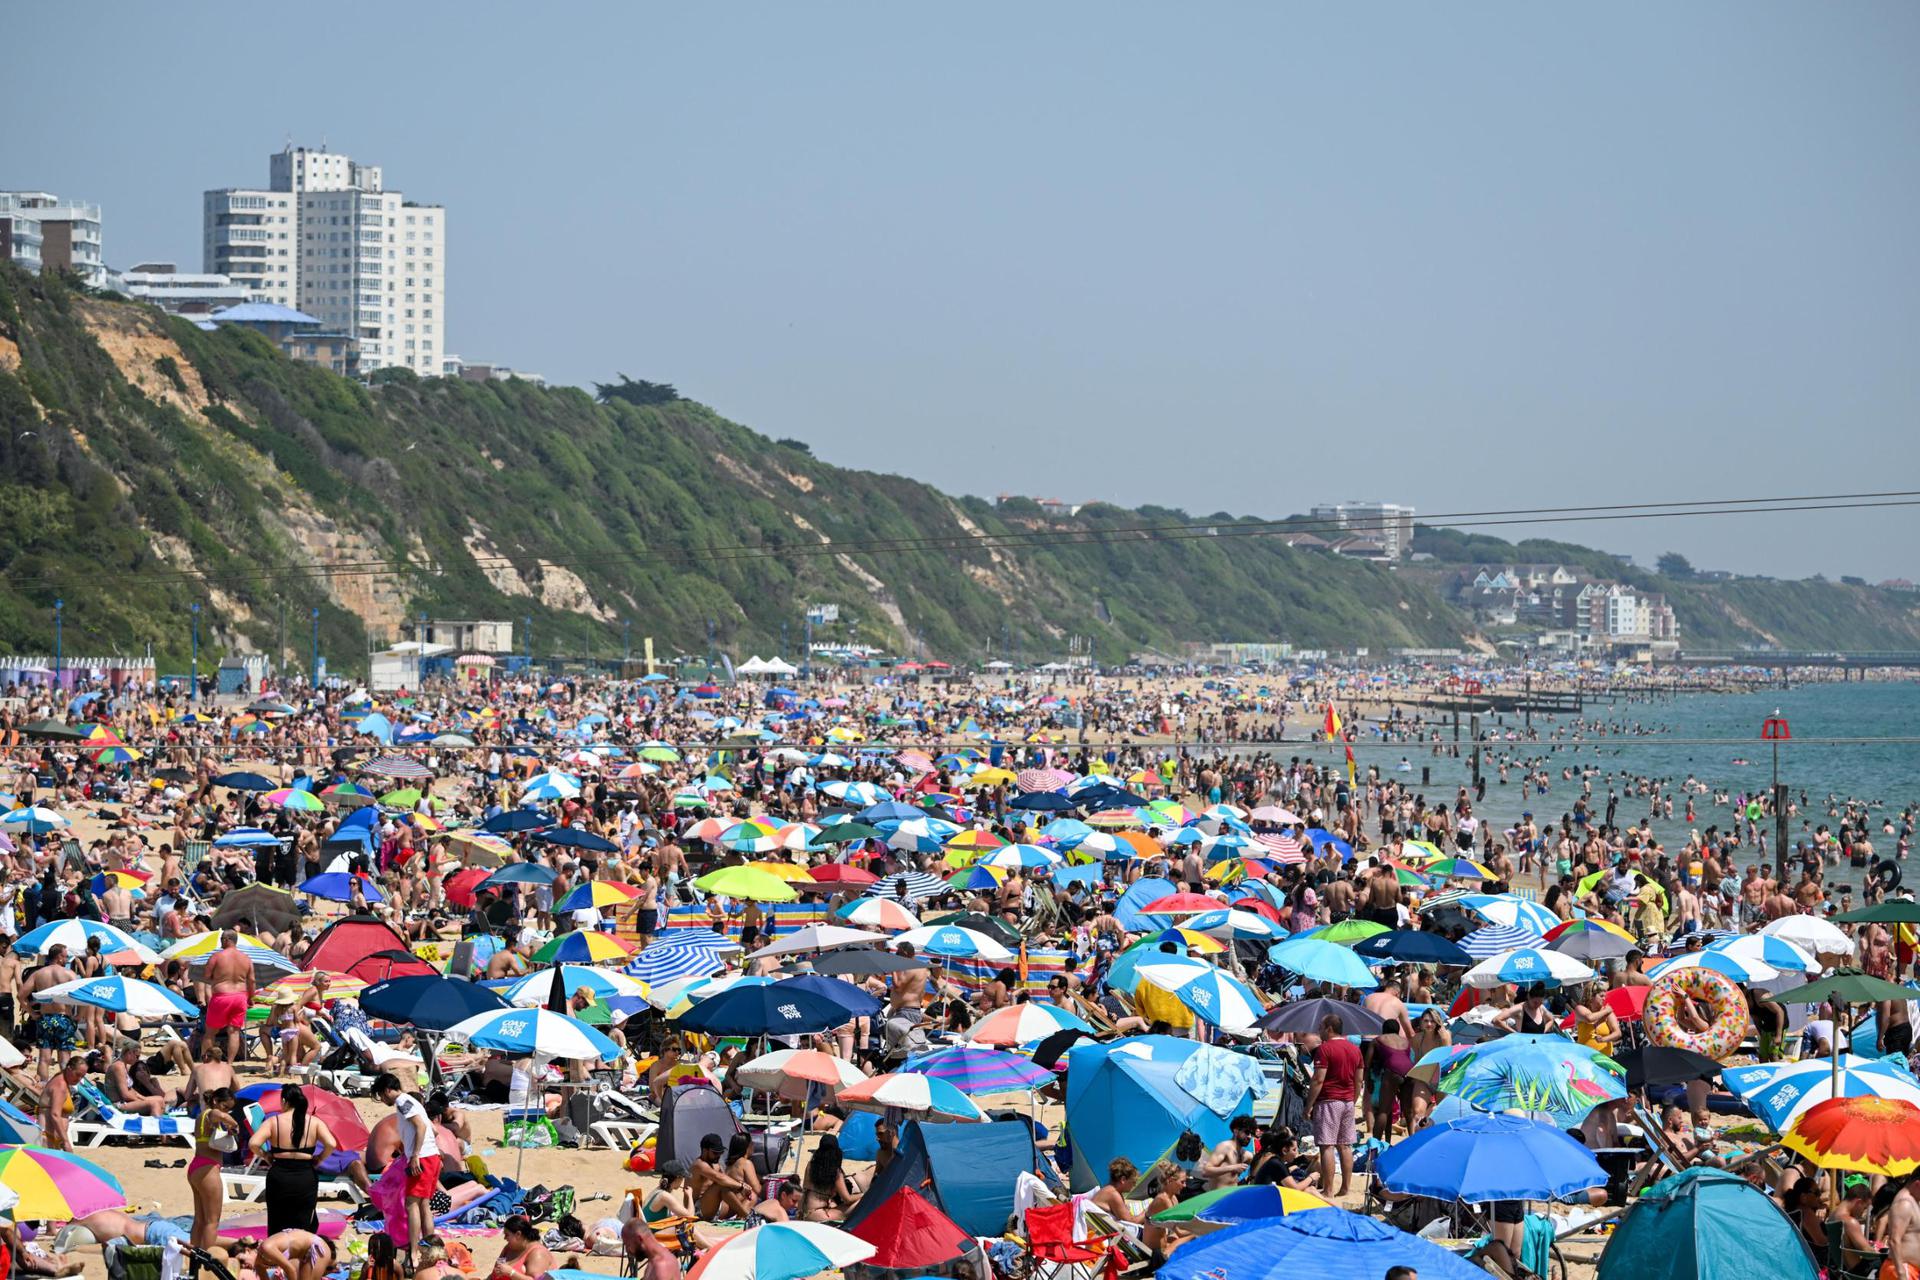 Crowded beach in England